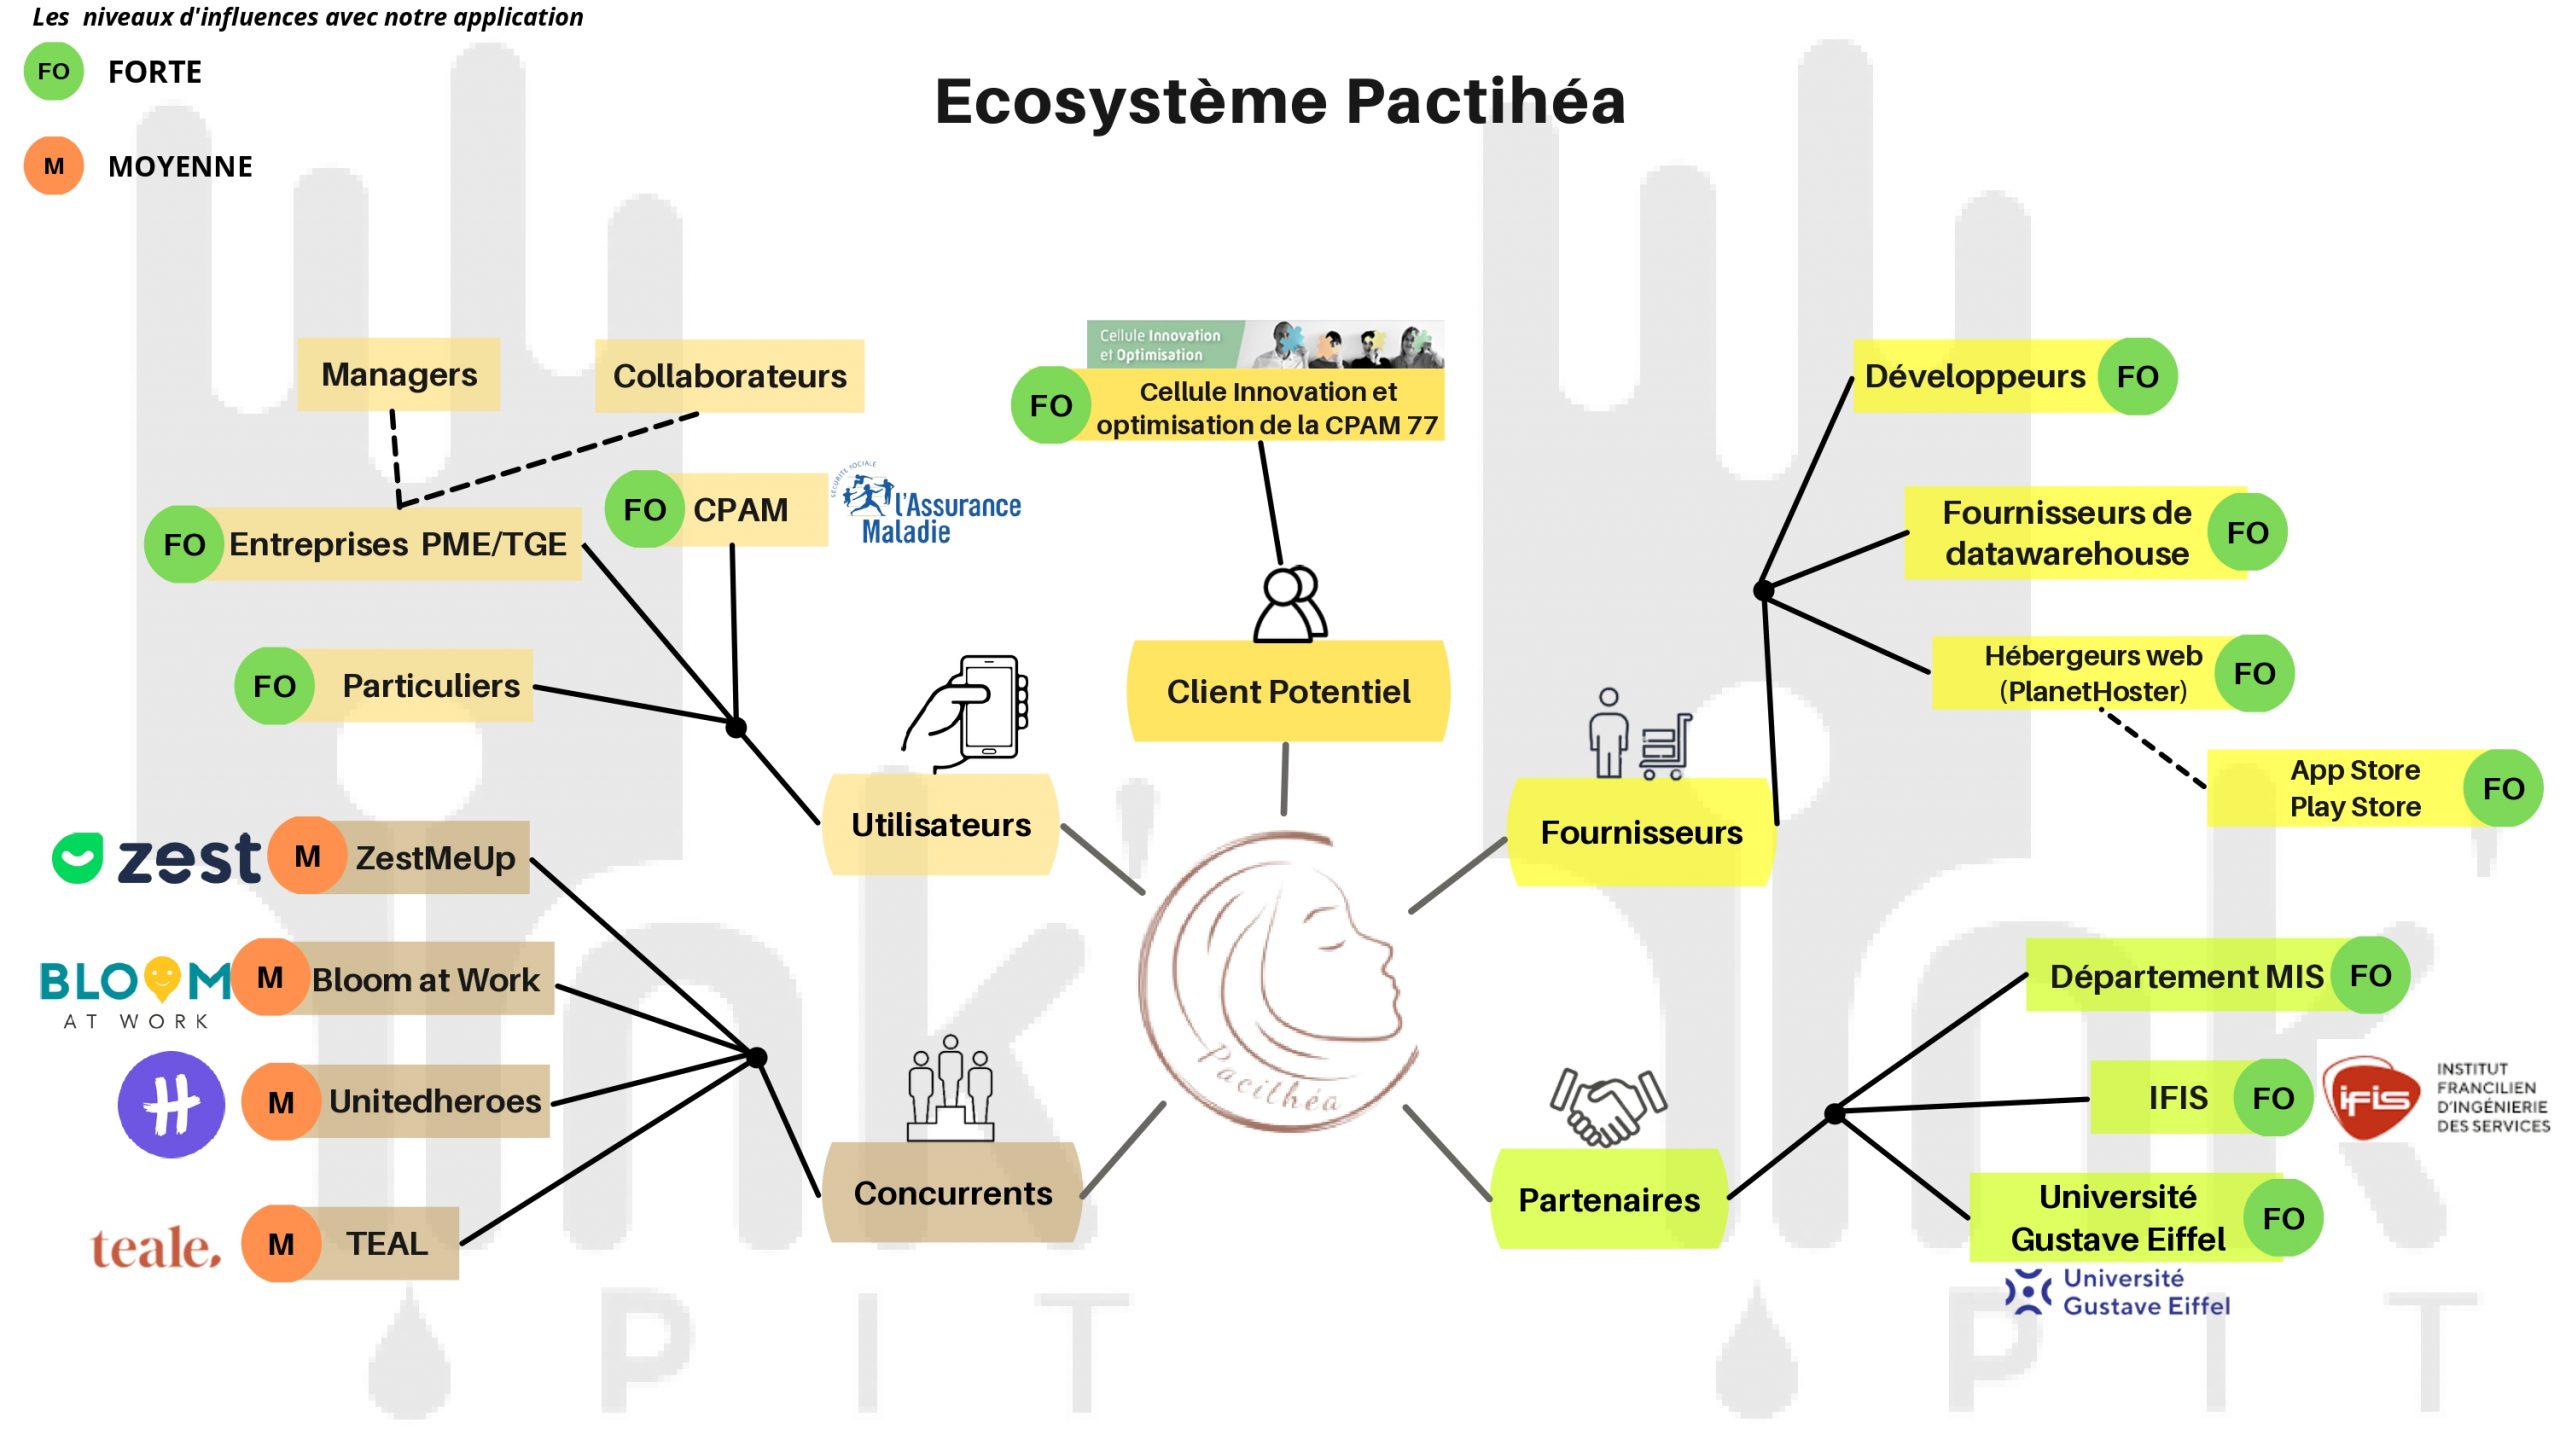 Ecosysteme Pactihéa